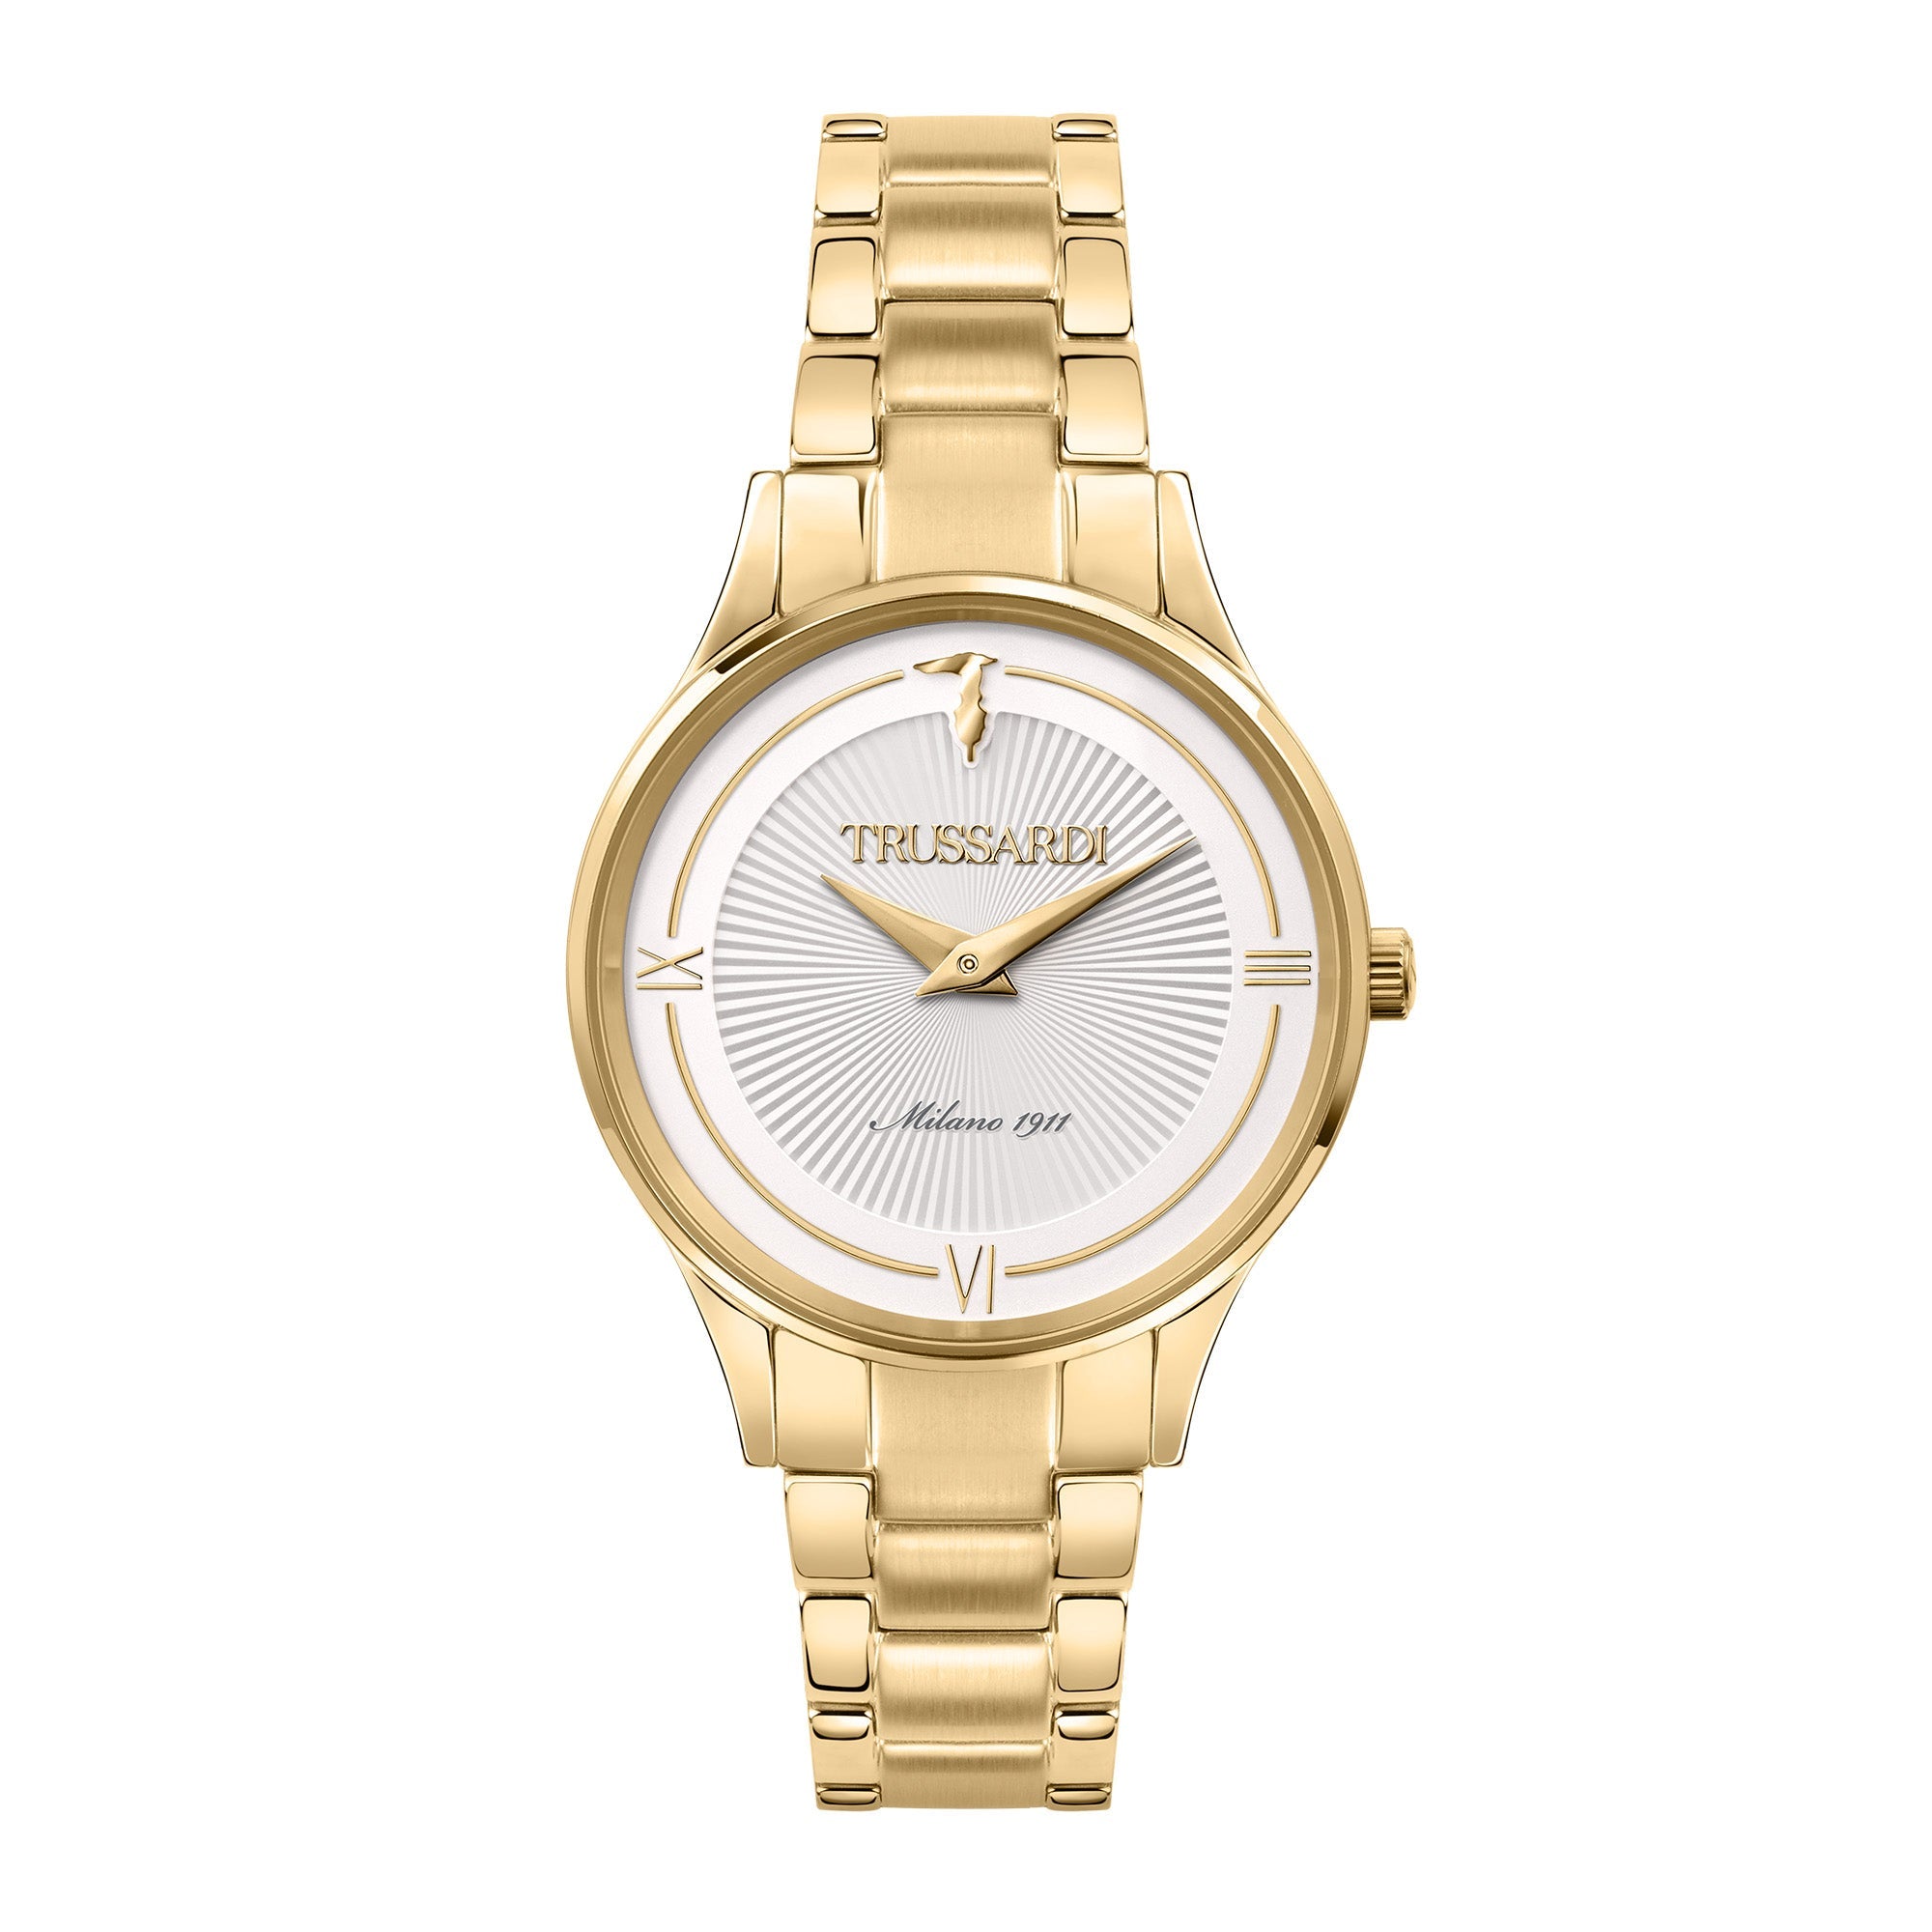 trussardi-gold-edition-watch-silver-dial-gold-bracelet